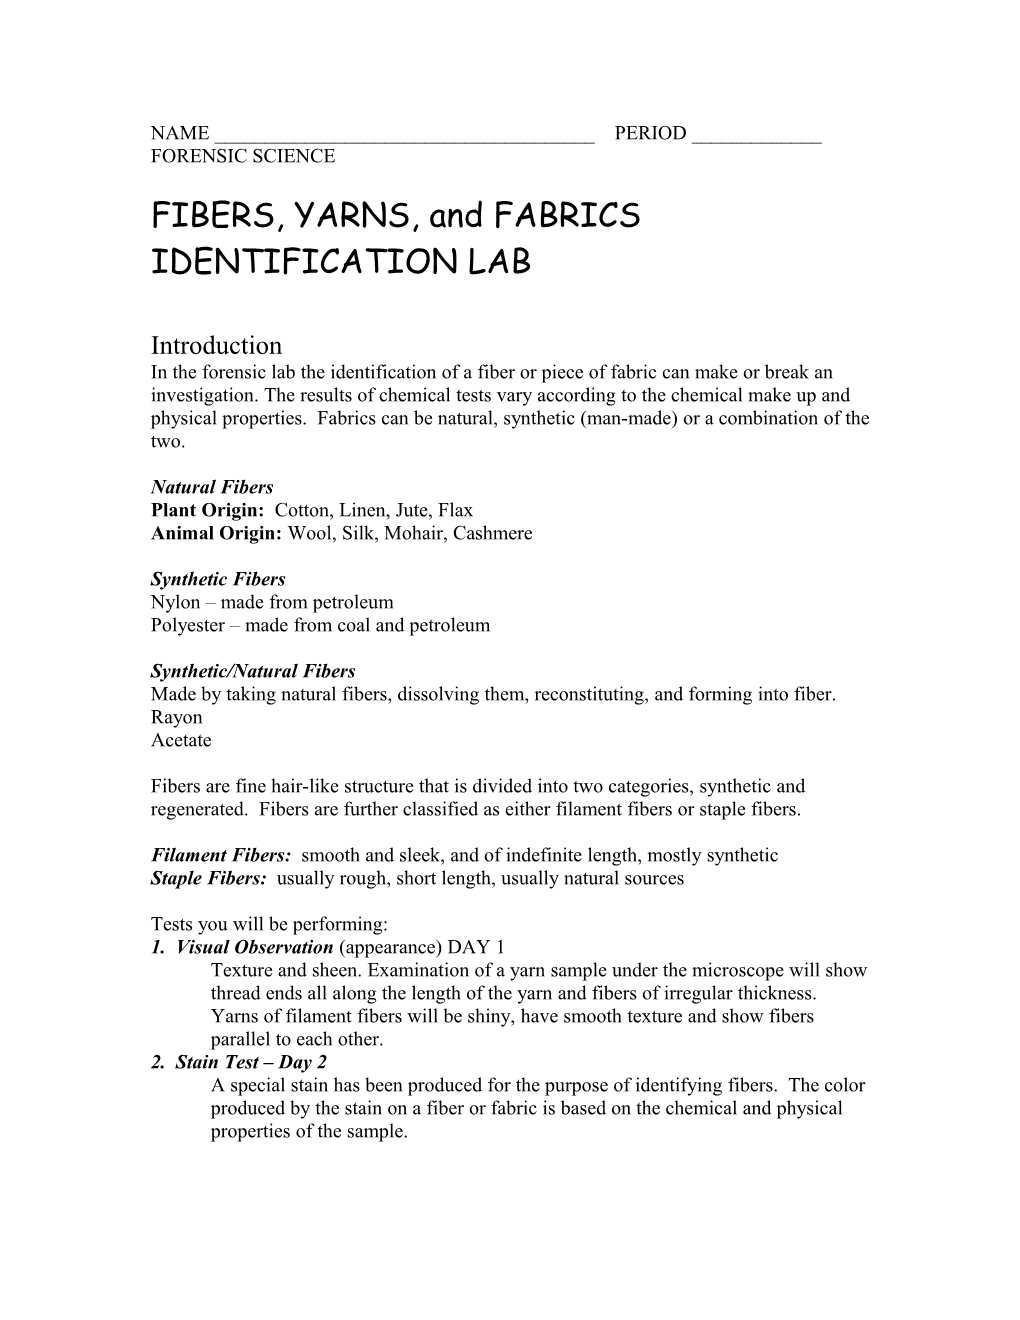 FIBERS, YARNS, and FABRICS IDENTIFICATION LAB